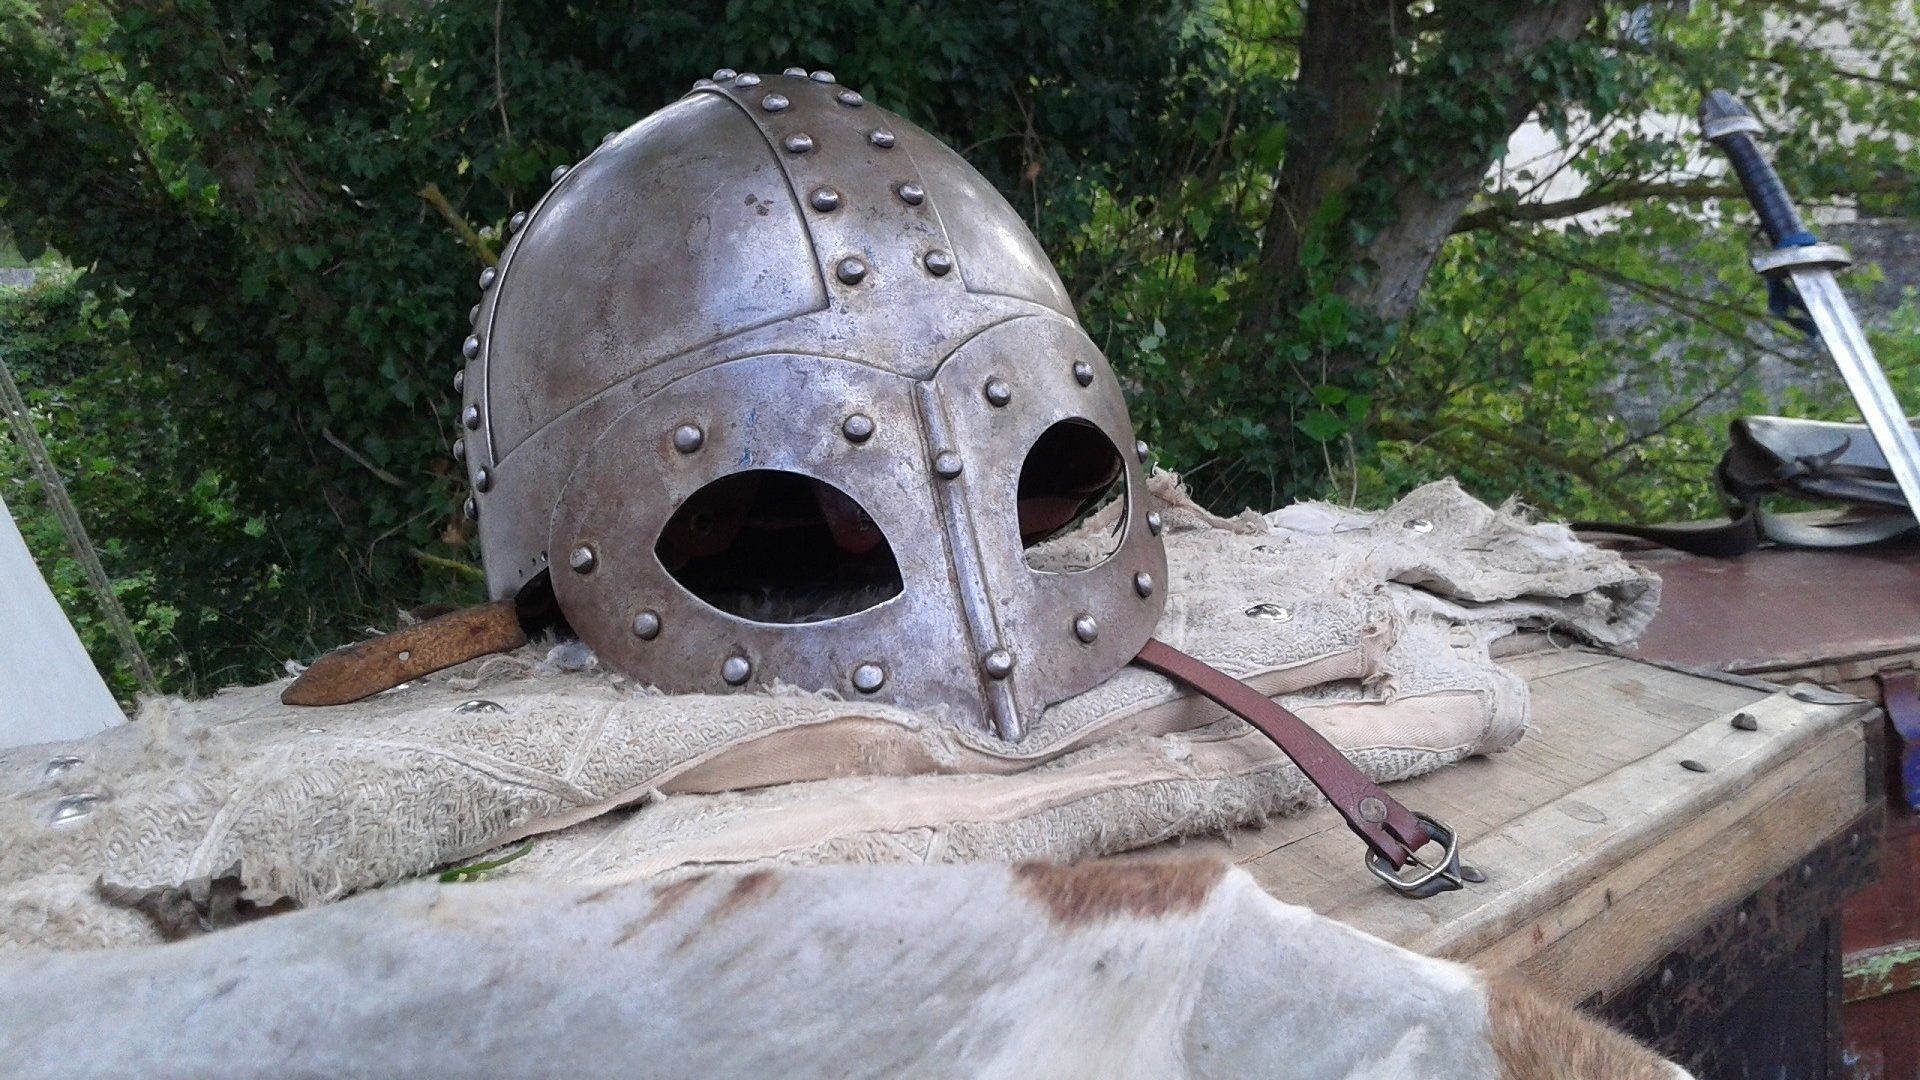 1920x1080 Medieval - Medieval Helmet Warrior Viking Camp Sword Full HD Wallpaper for  HD 16:9